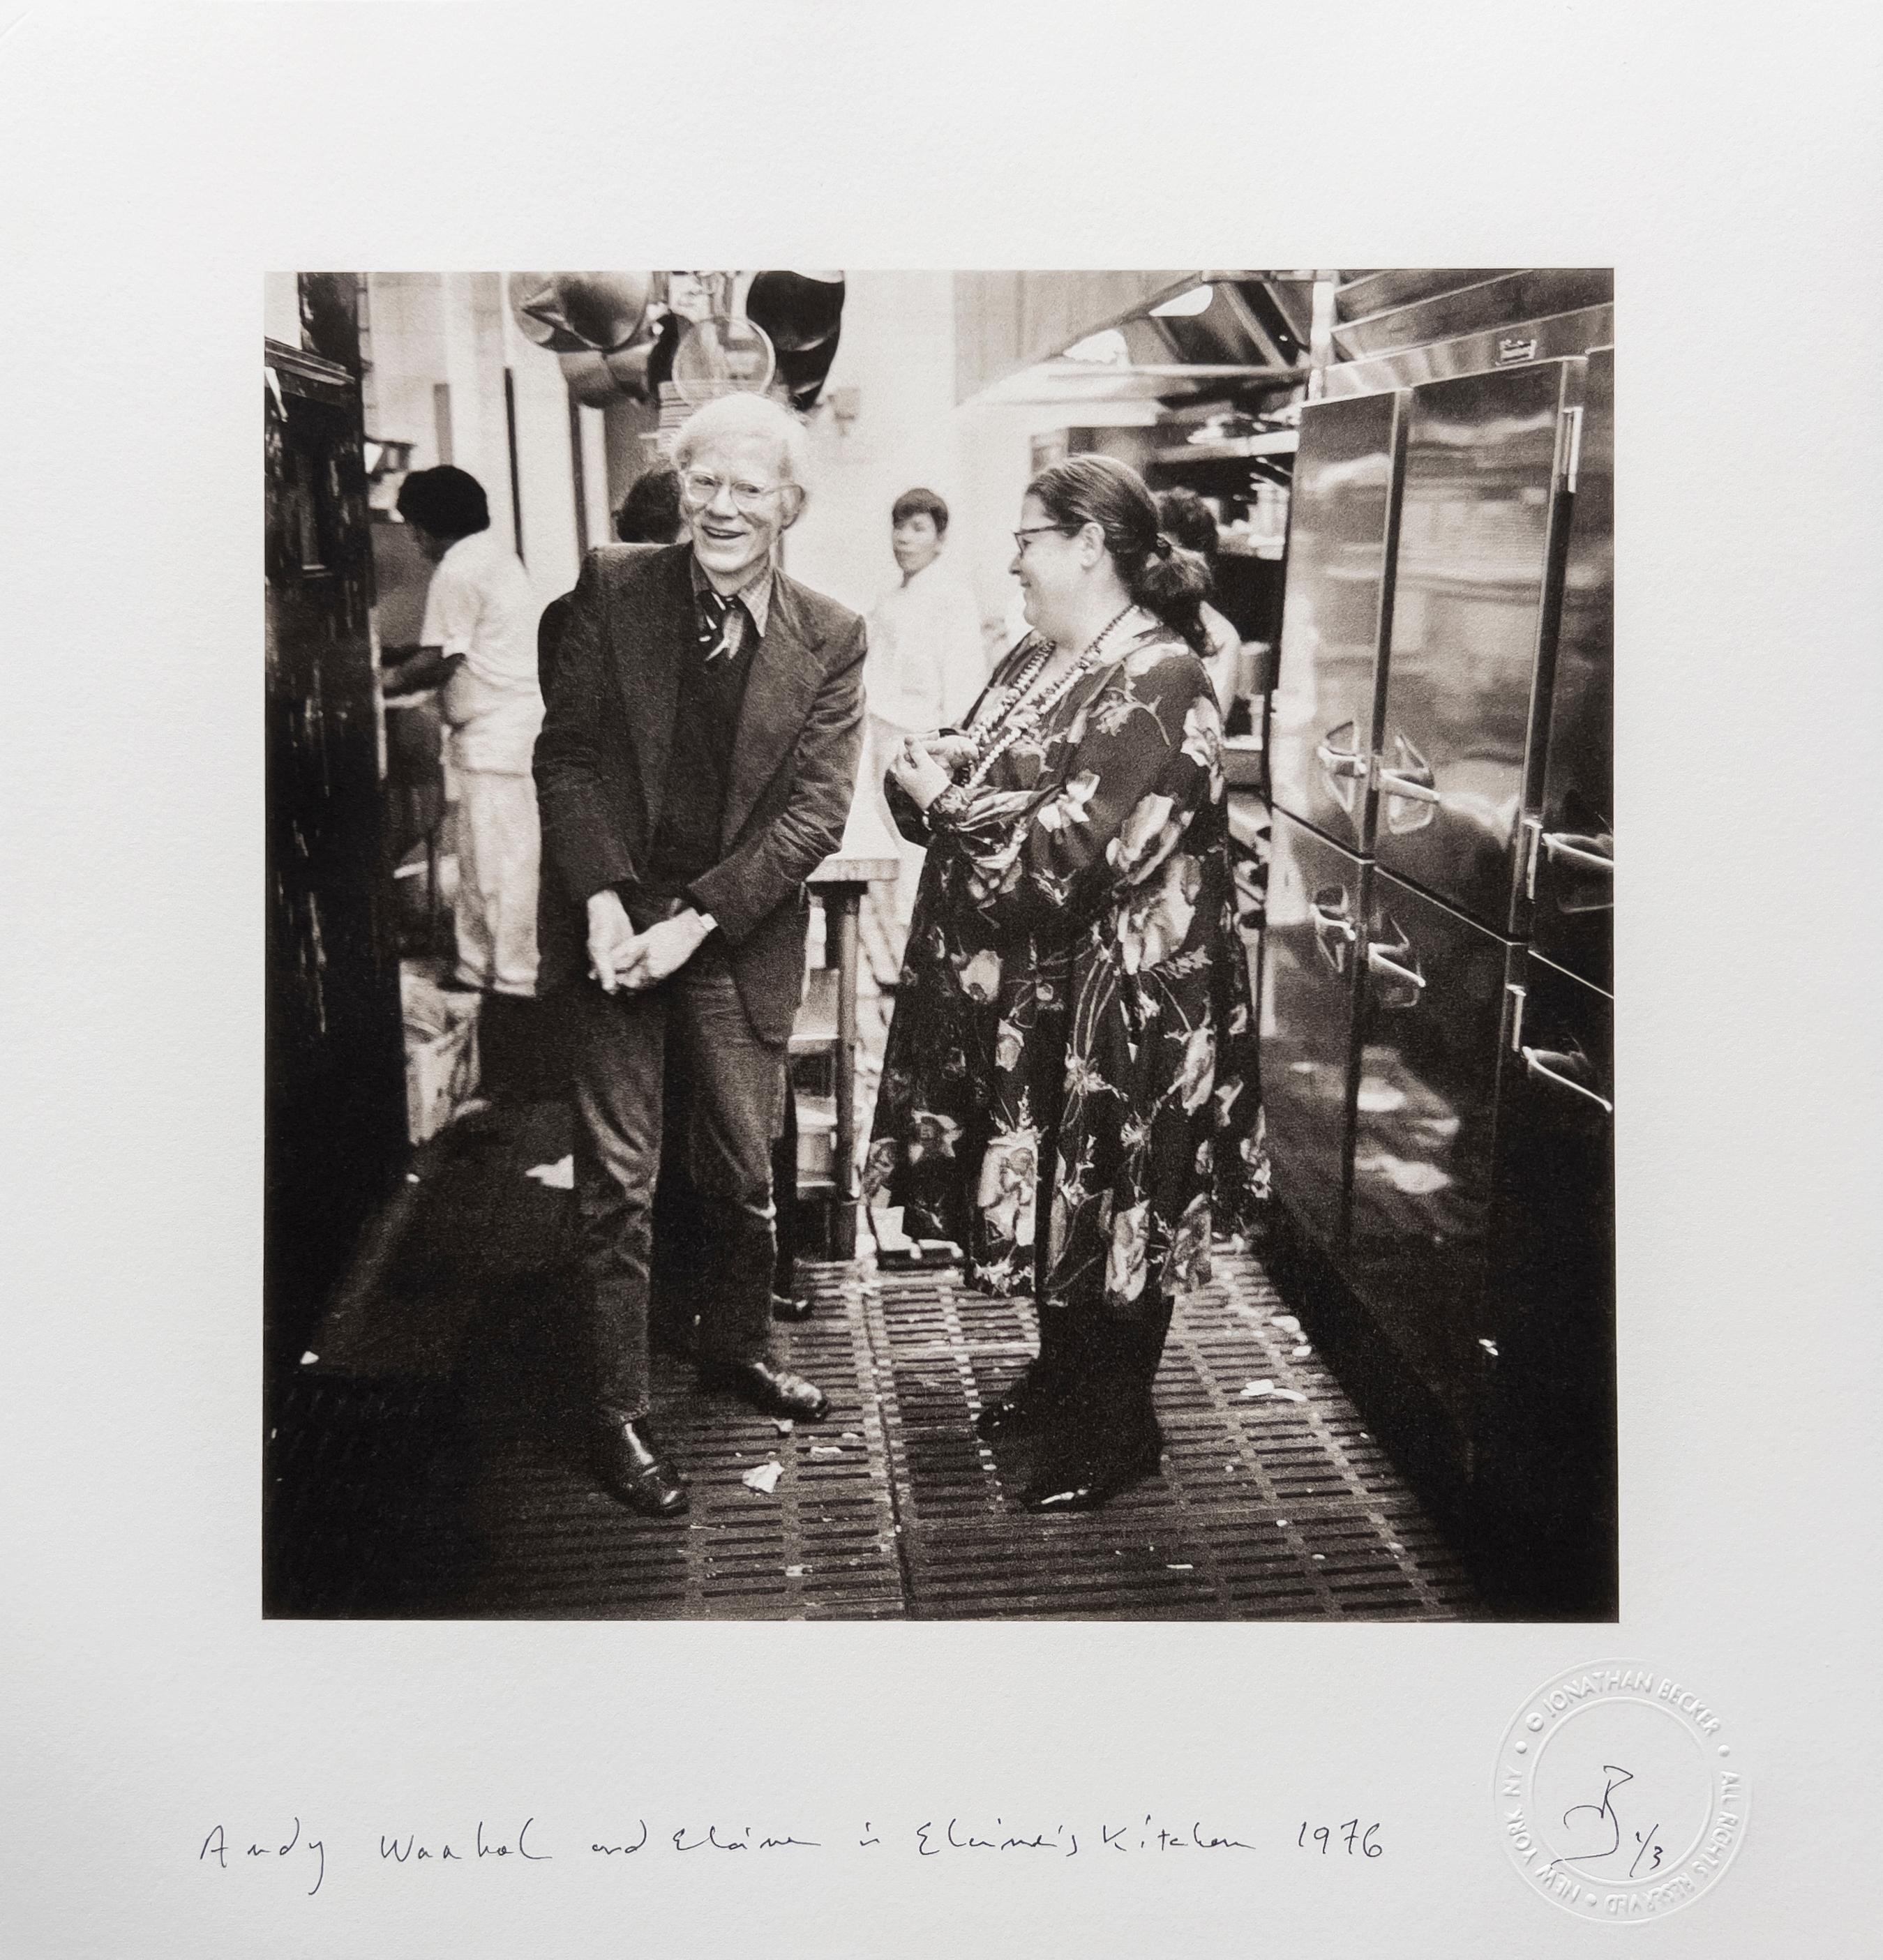 Portrait Photograph Jonathan Becker - Elaine's Kitchen - Andy Warhol et Elaine,  New York, 1976